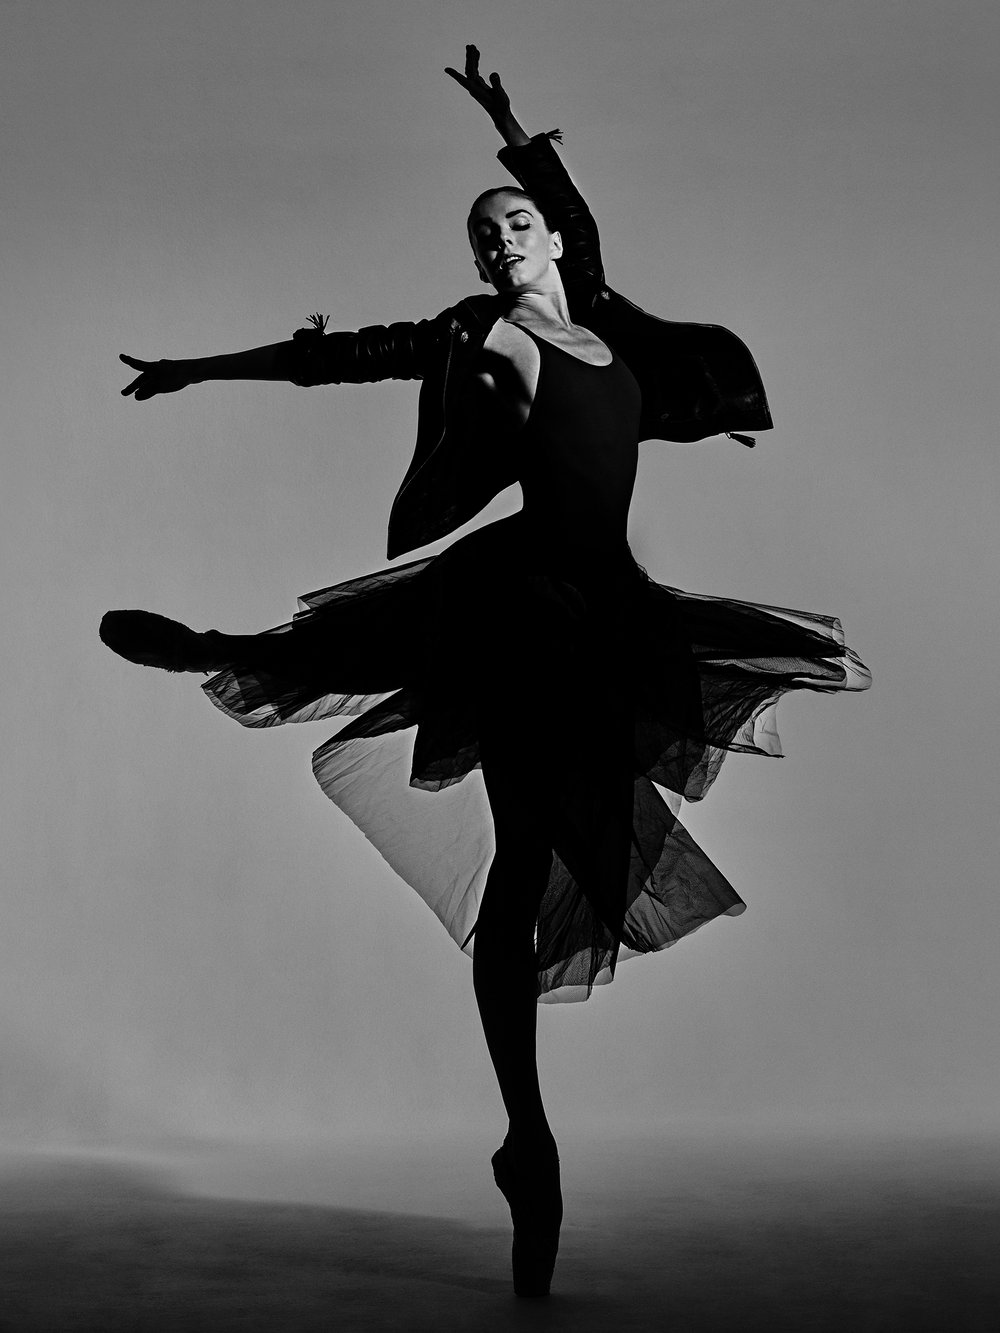 Image of Natalia Osipova, Principal Dancer of The Royal Ballet, poster image for 'Pure Dancer'.